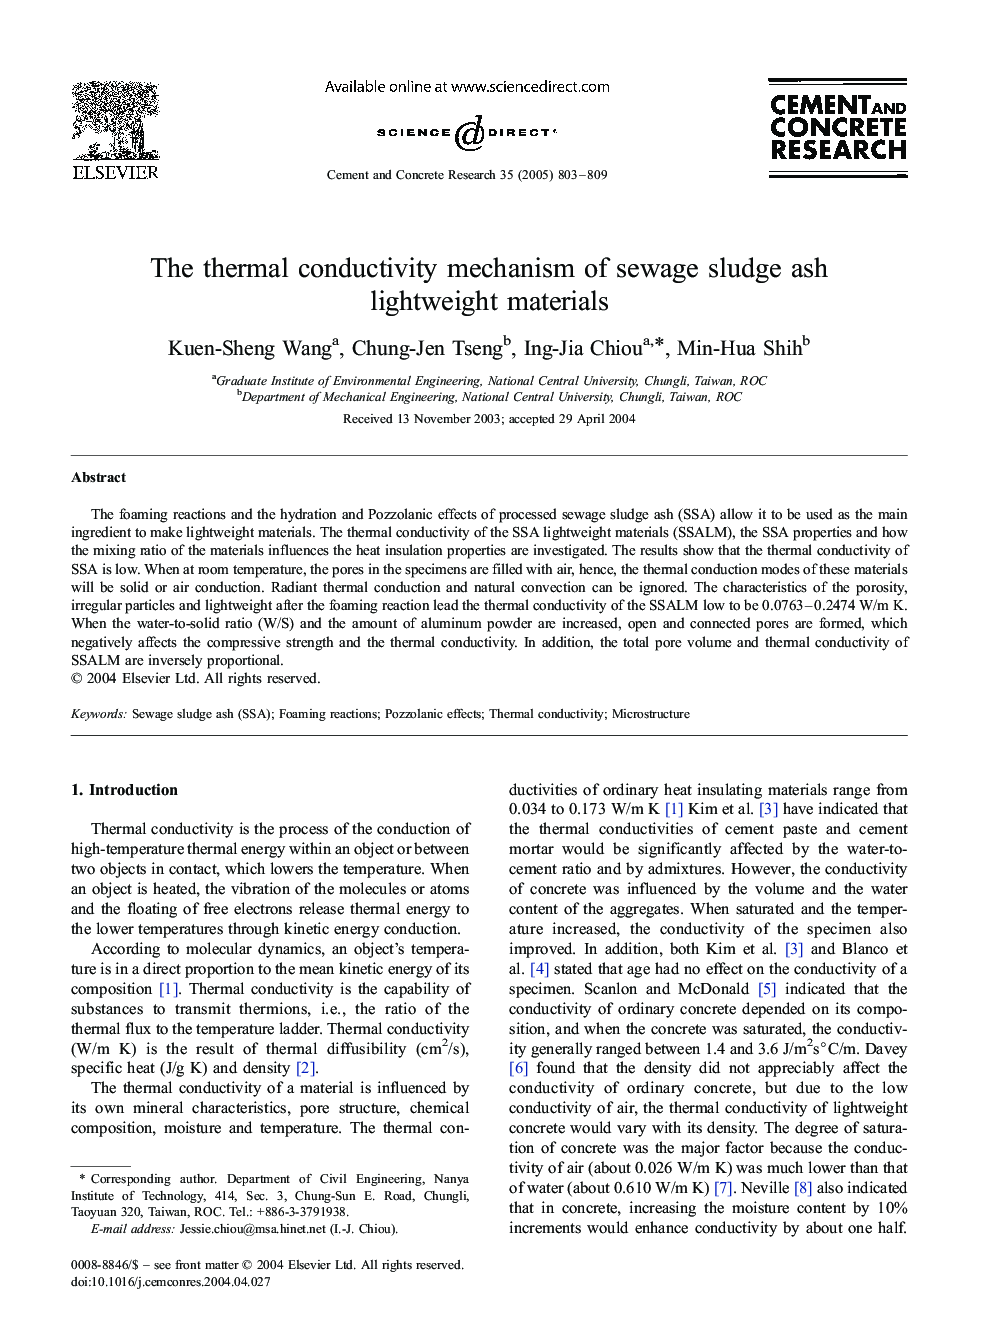 The thermal conductivity mechanism of sewage sludge ash lightweight materials